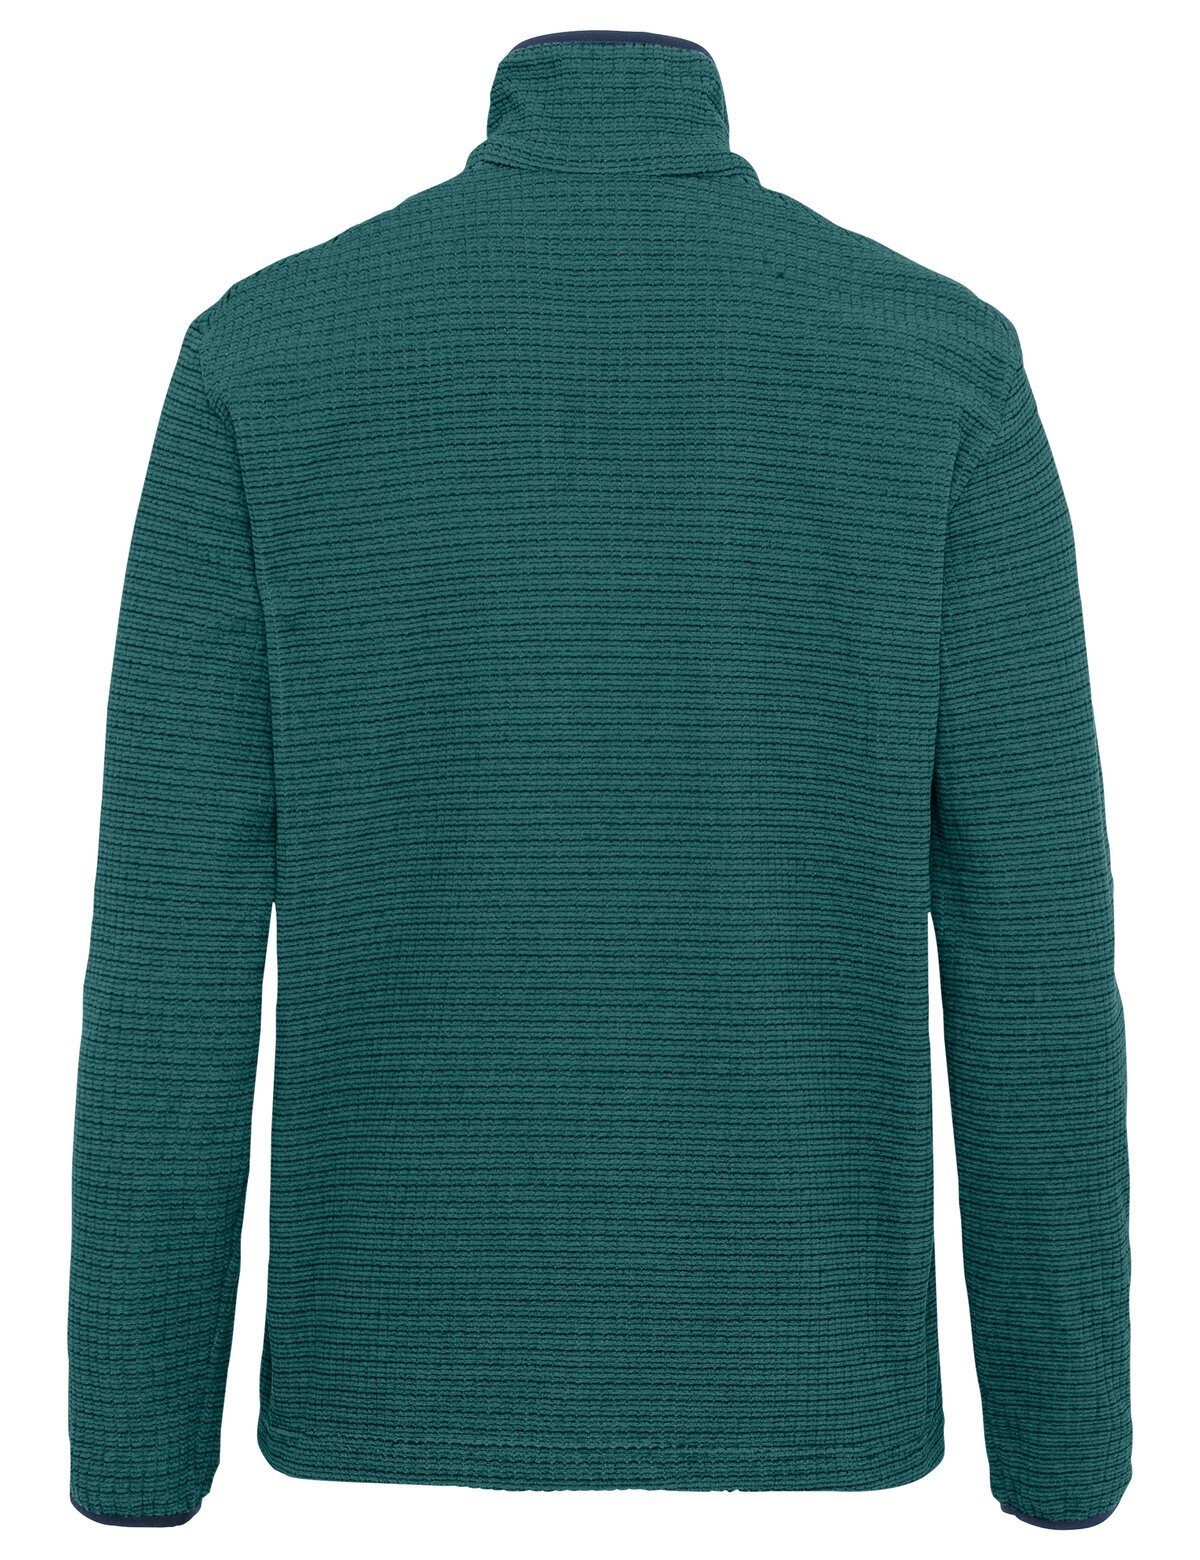 (1-St) Neyland Outdoorjacke Men's Jacket Fleece Klimaneutral kompensiert green VAUDE mallard